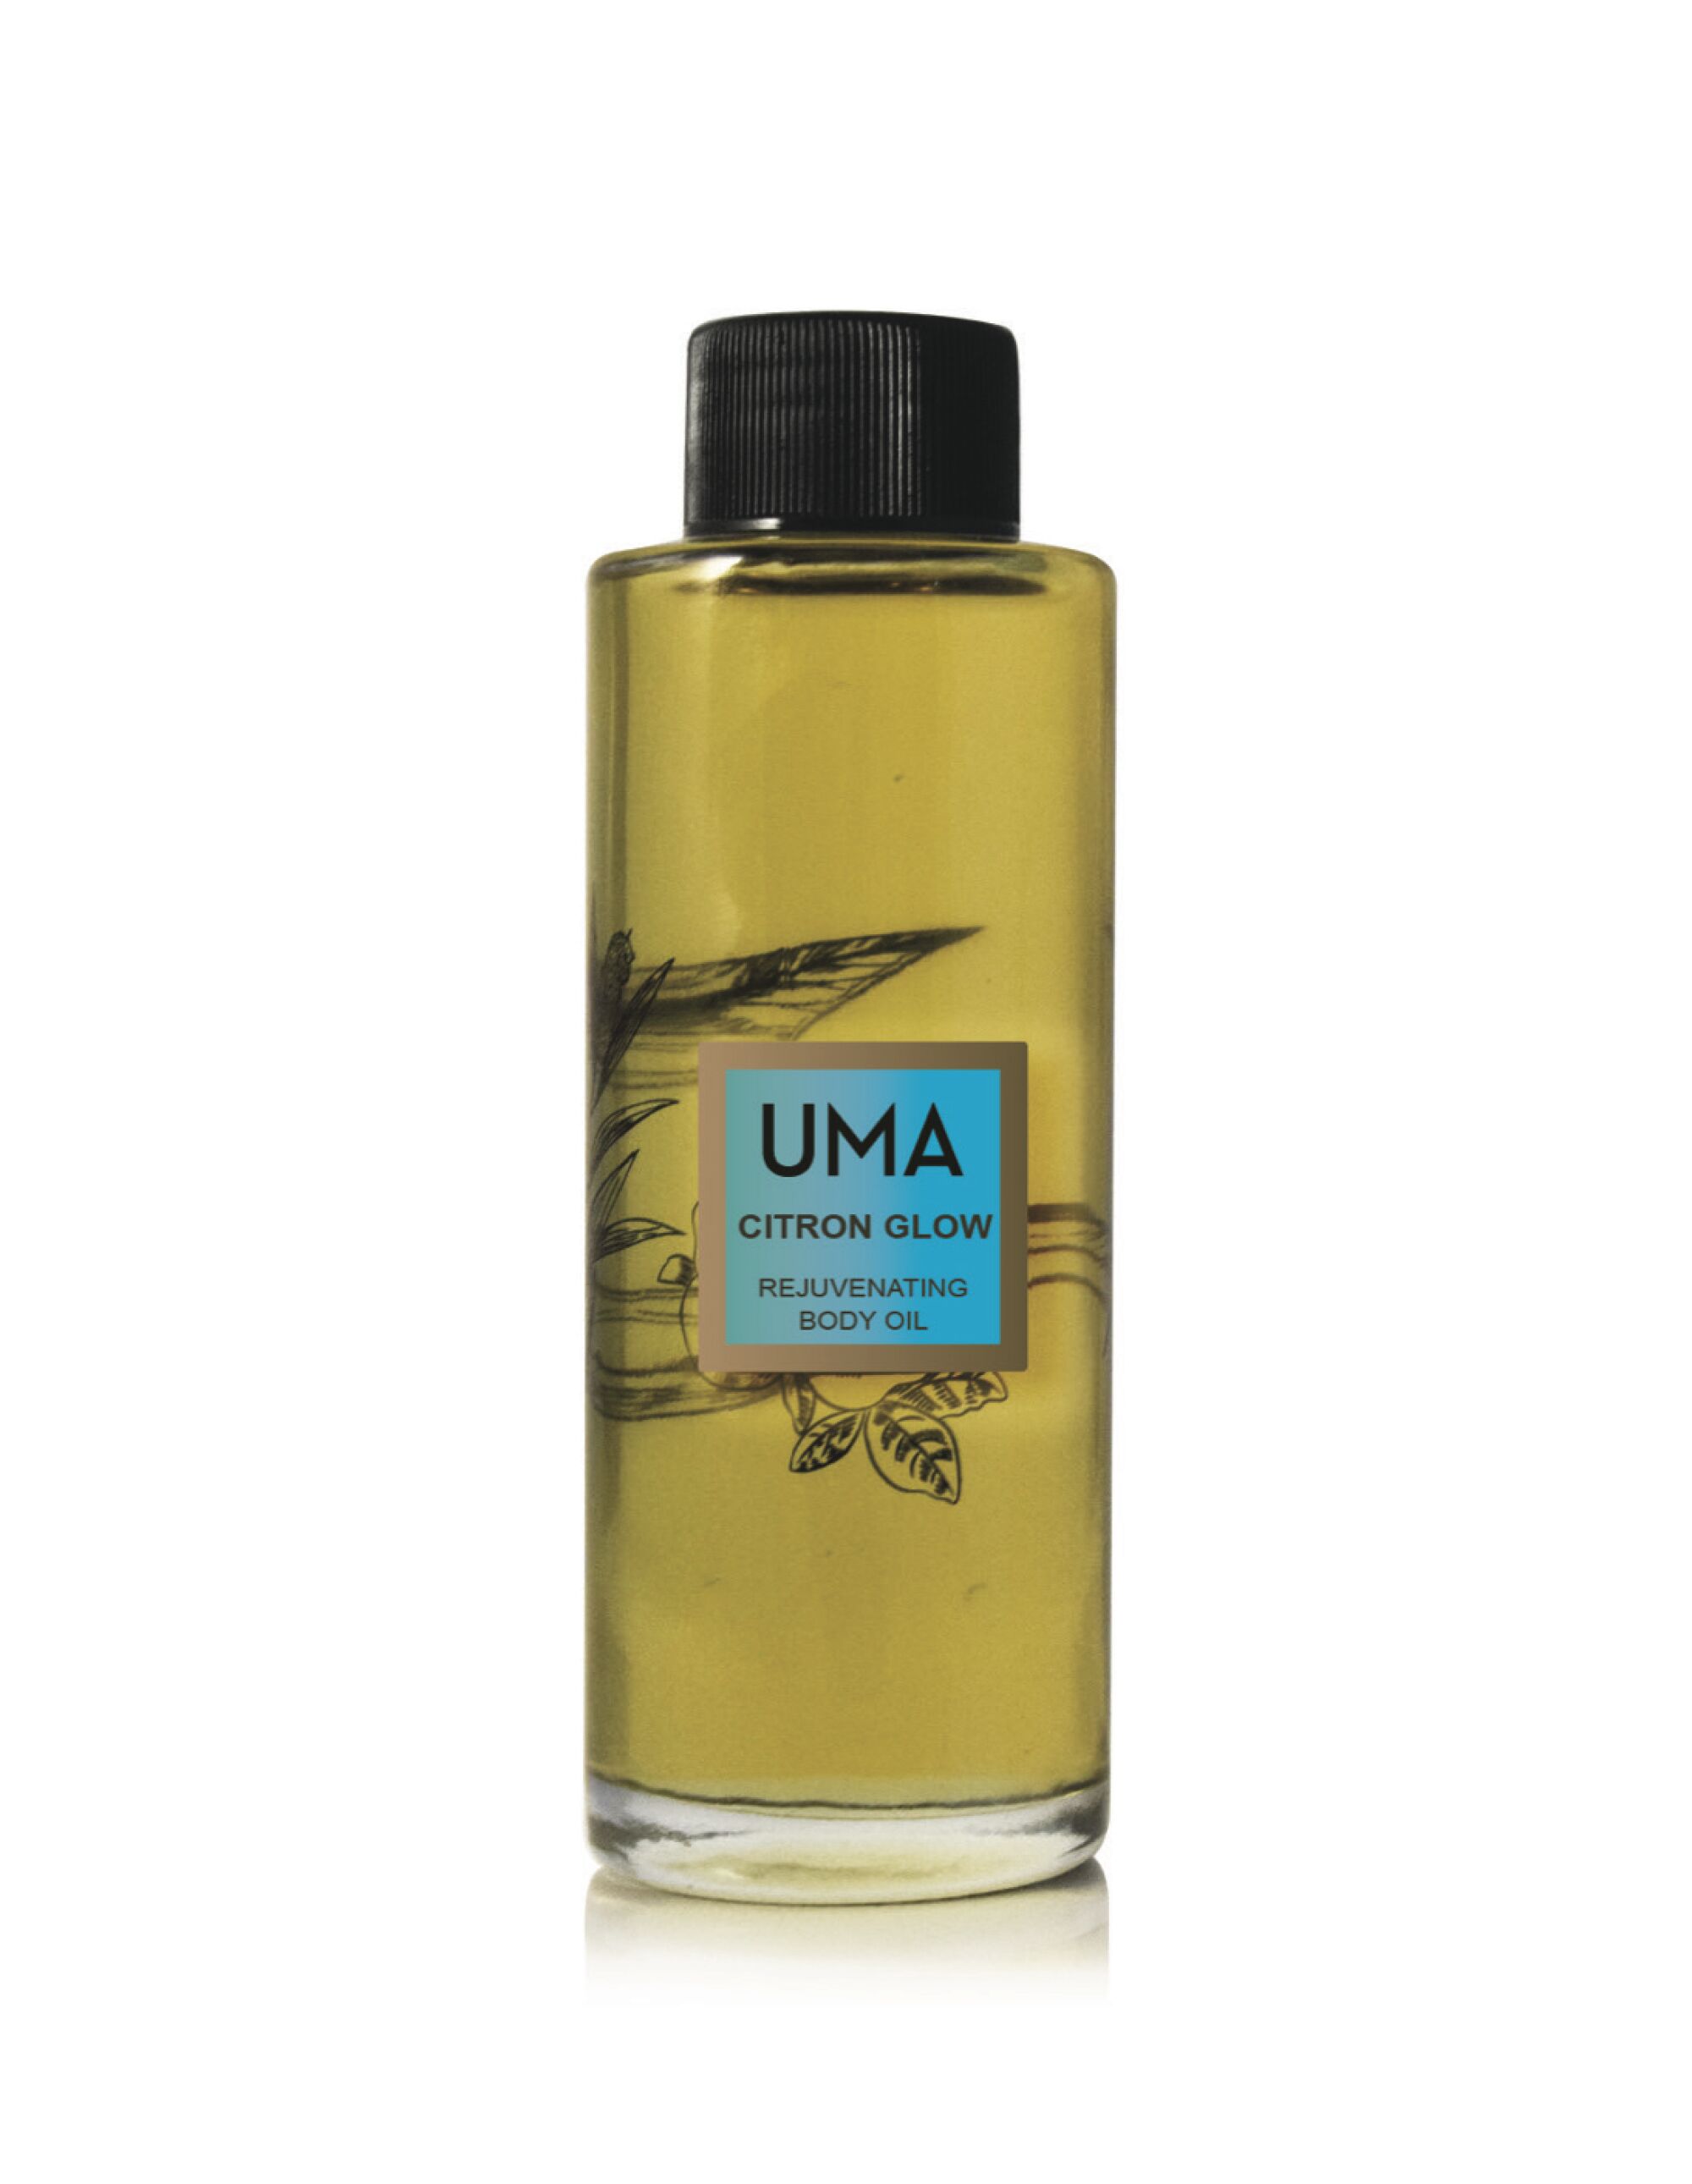 UMA citron glow body oil bottle